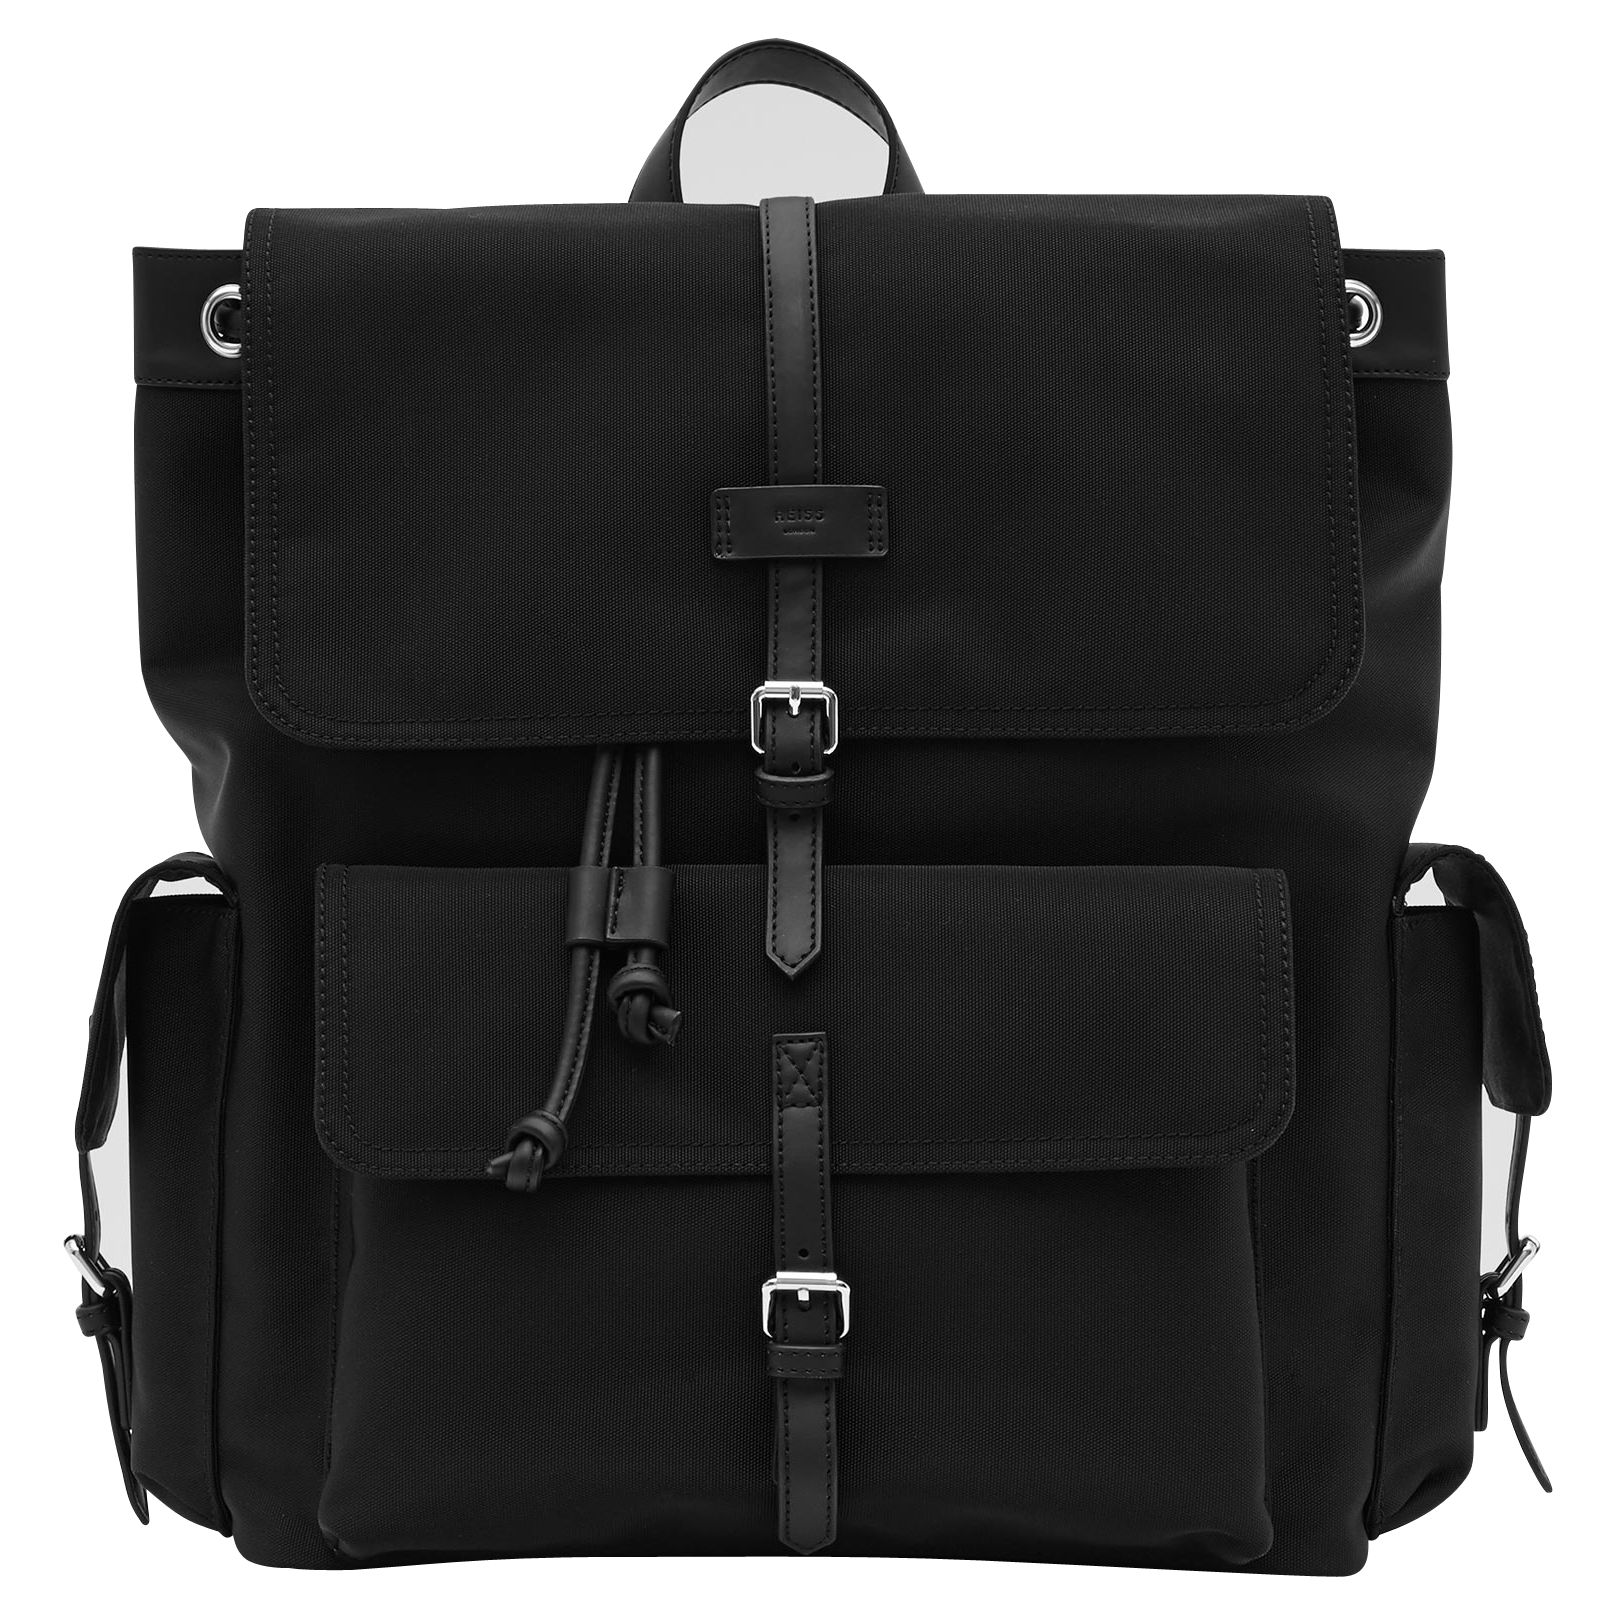 Reiss Sydney Textured Backpack, Black